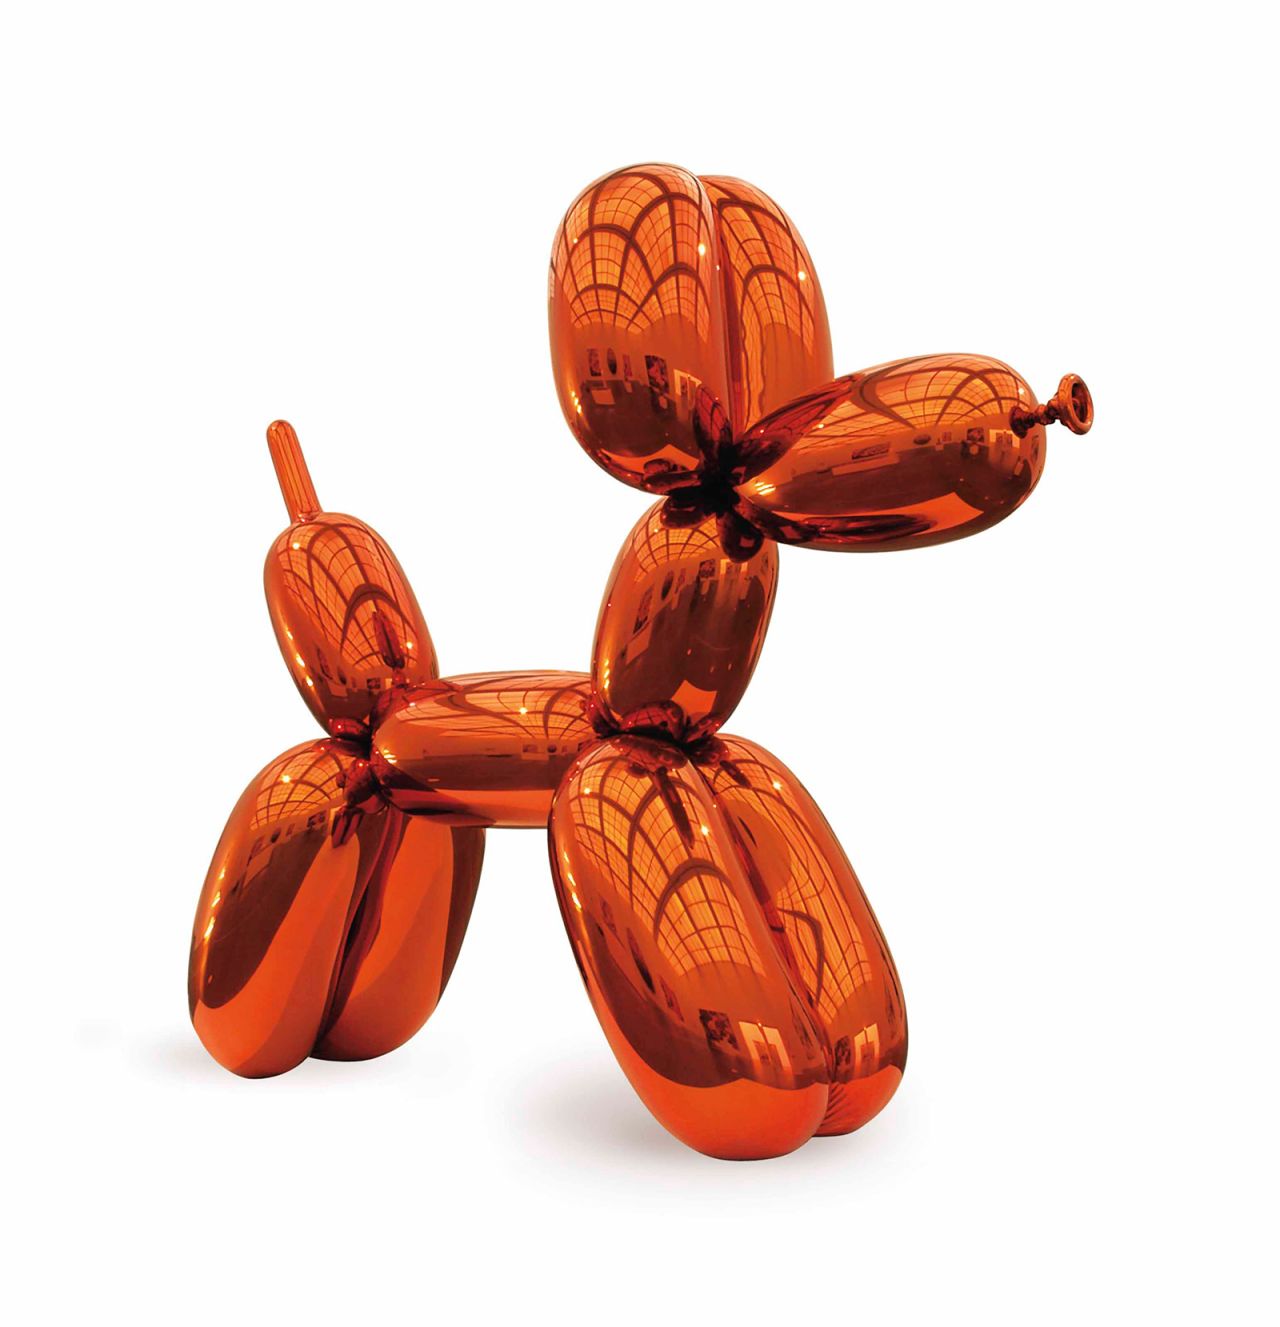 "Balloon Dog (Orange)" (1994-2000) by Jeff Koons